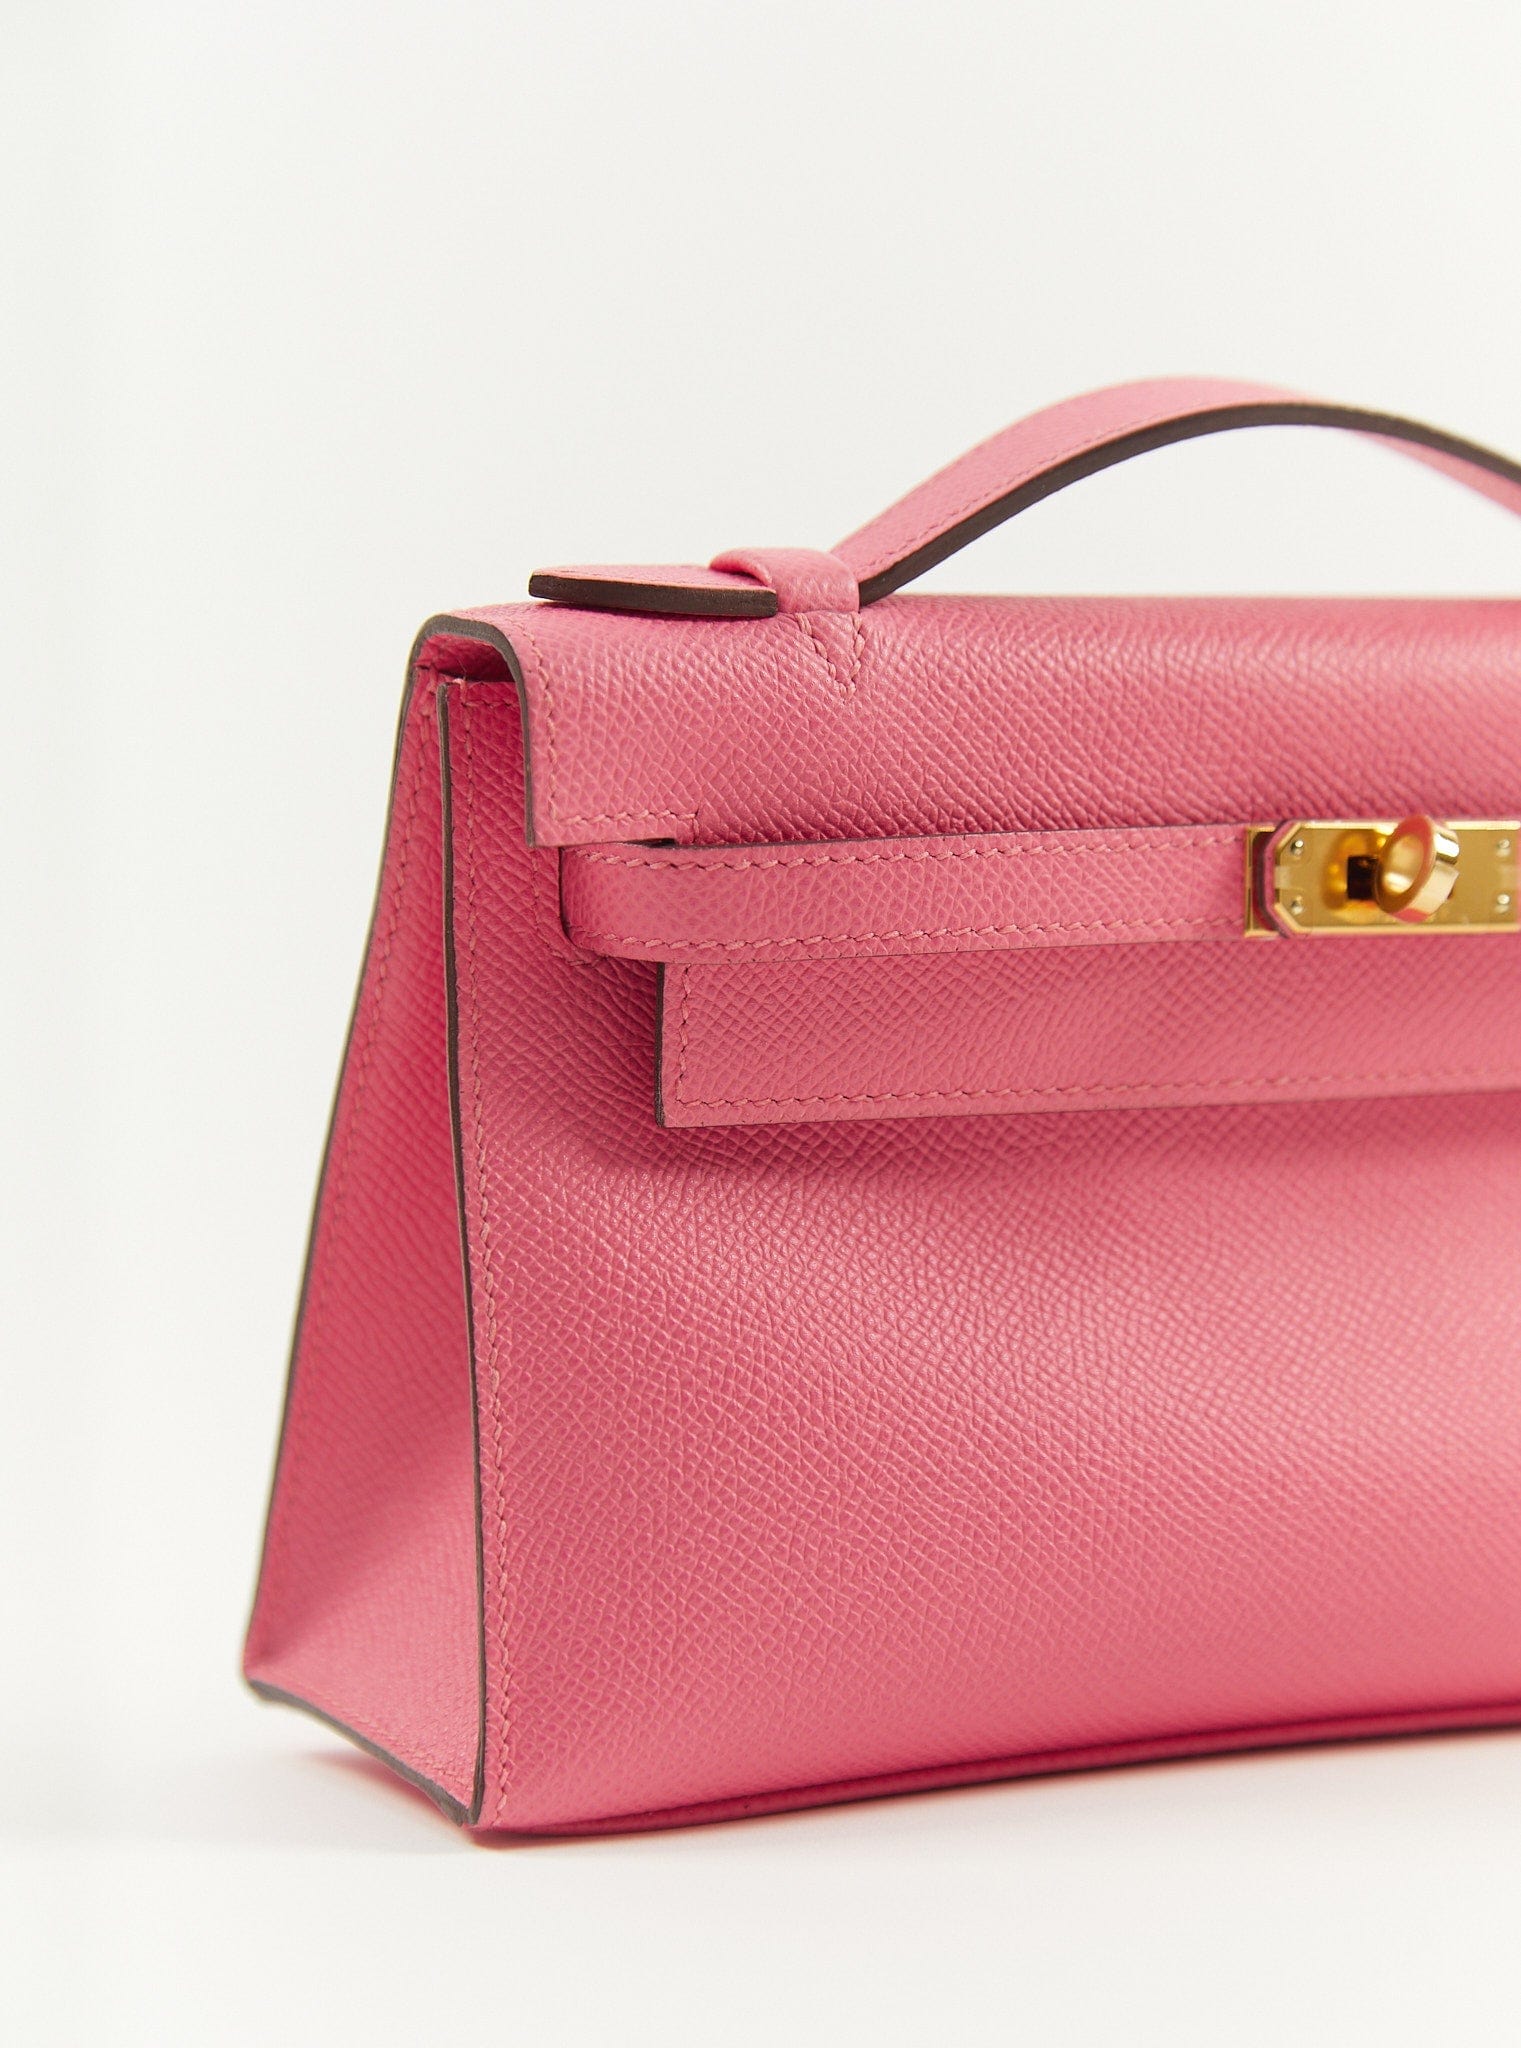 Hermès PRELOVED HERMÈS KELLY POCHETTE ROSE AZALEE Epsom Leather with Gold Hardware